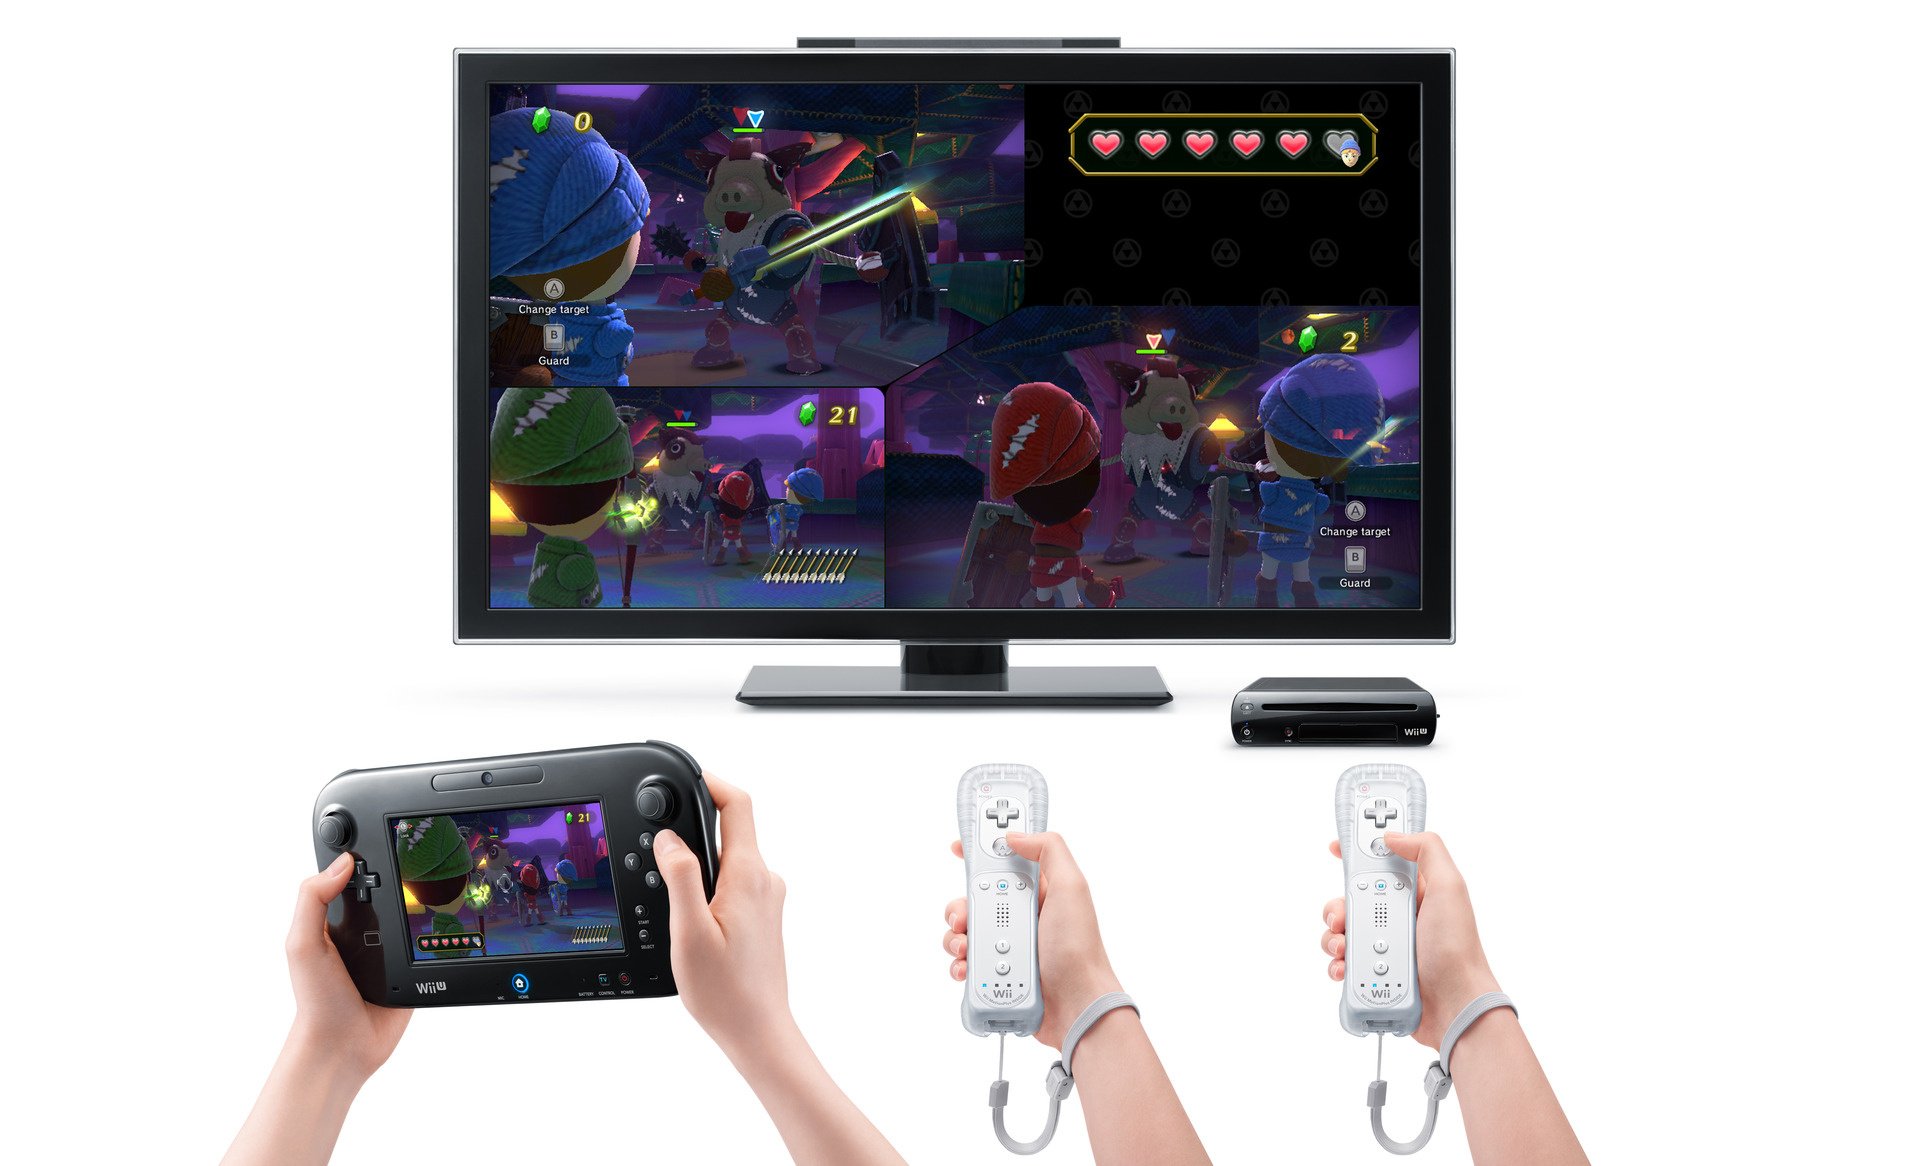 Nintendo Land (Wii U) review: Nintendo Land (Wii U) - CNET